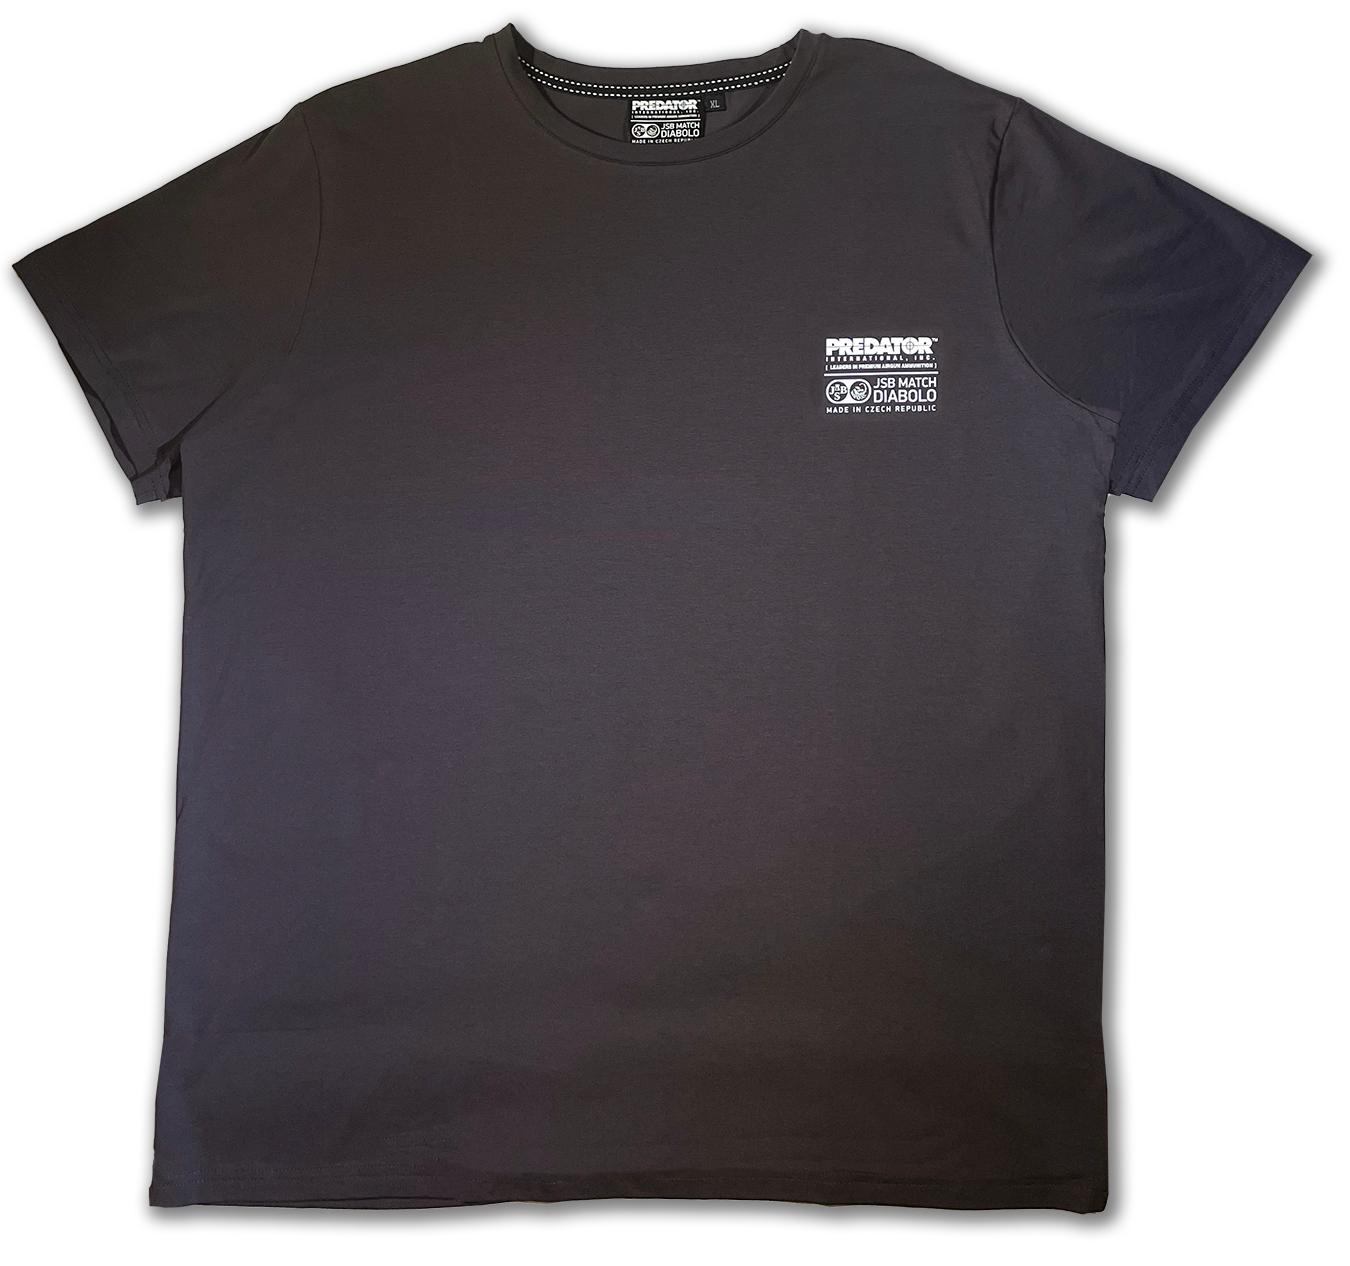 JSB Predator Short Sleeve Cotton/Spandex T-Shirt, Grey, XXL